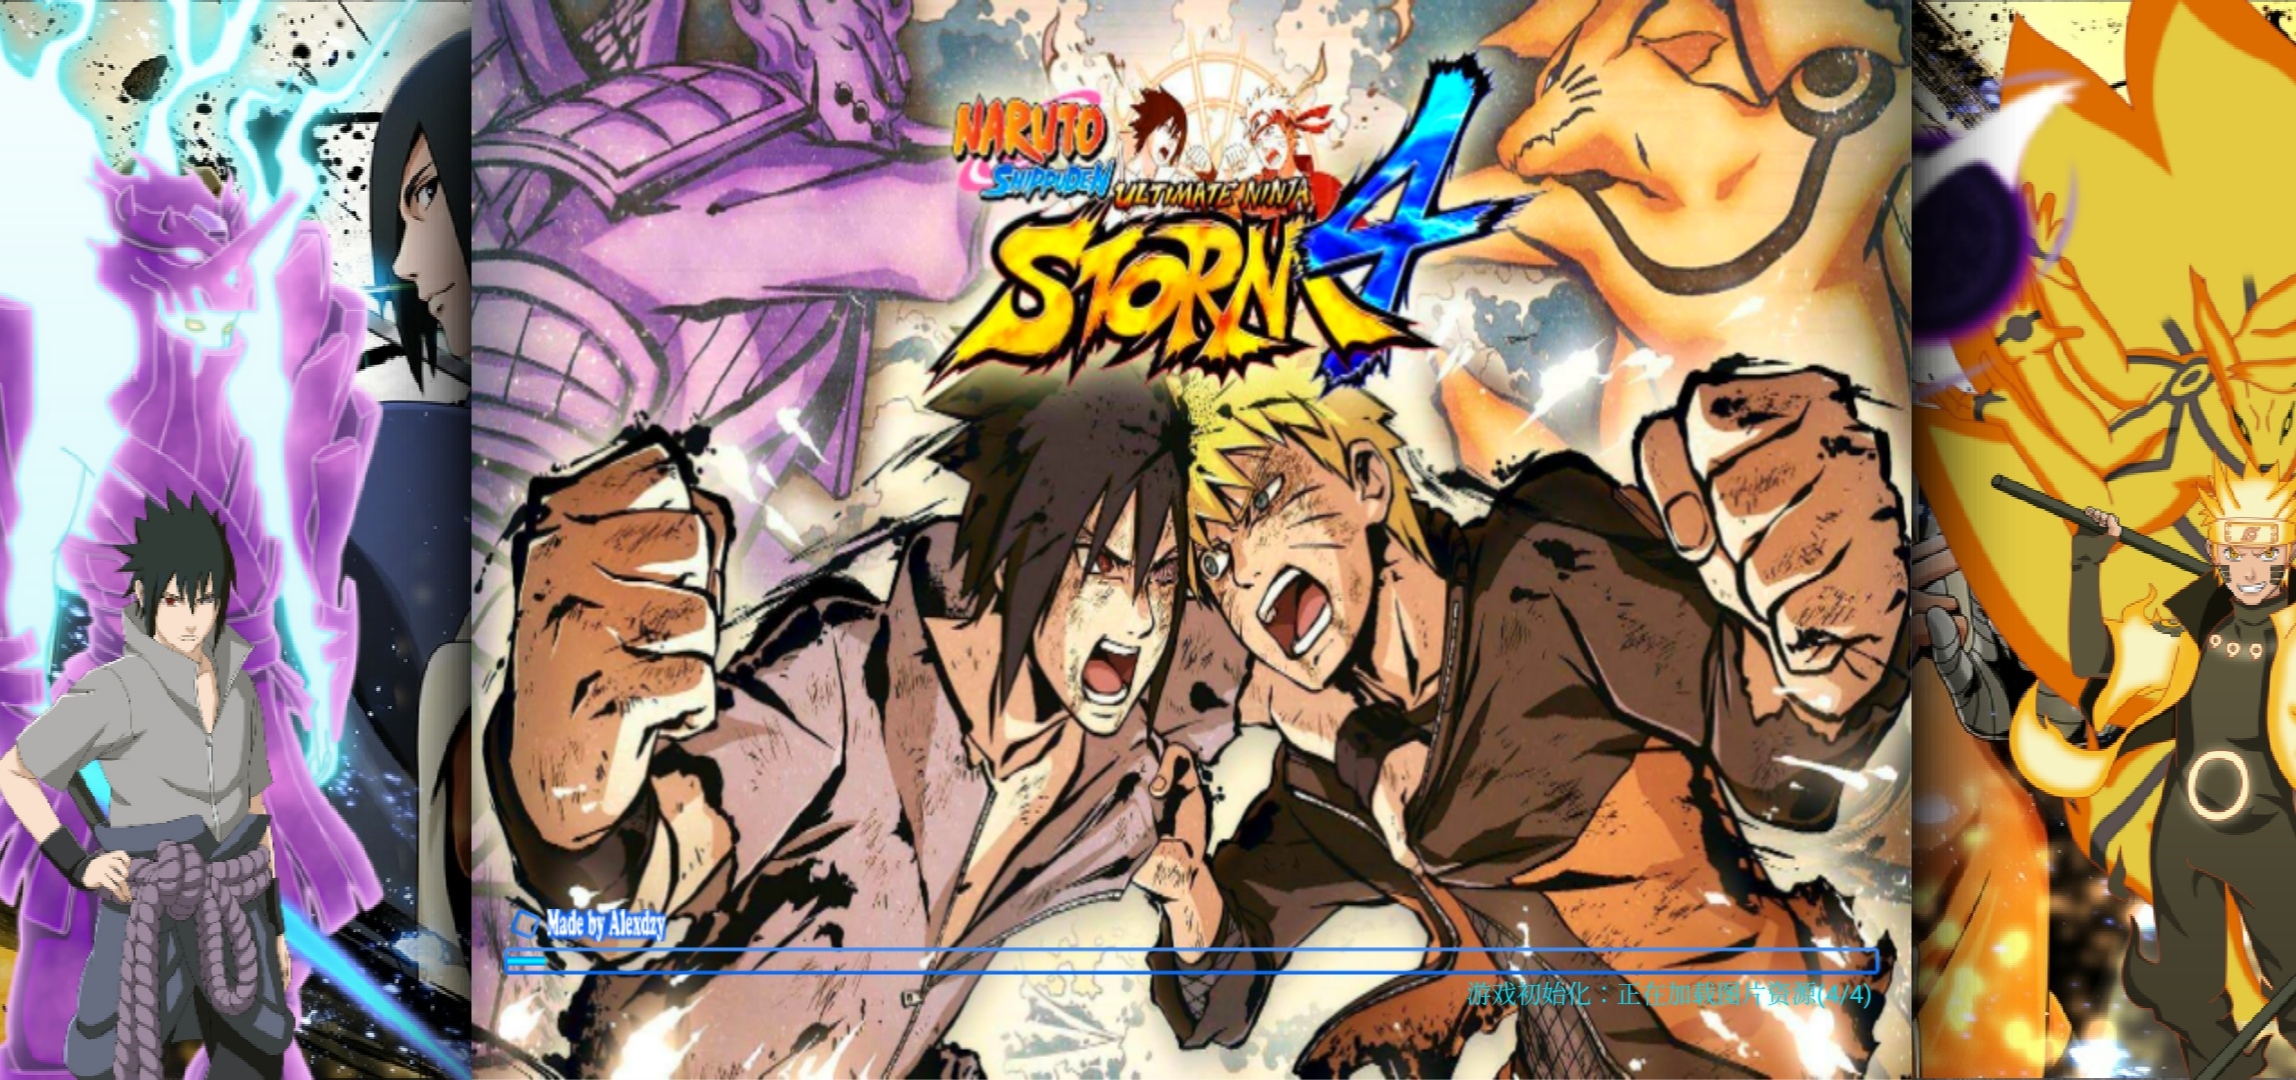 Download Nrsen Enki Storm 4 Final Battle Naruto Senki